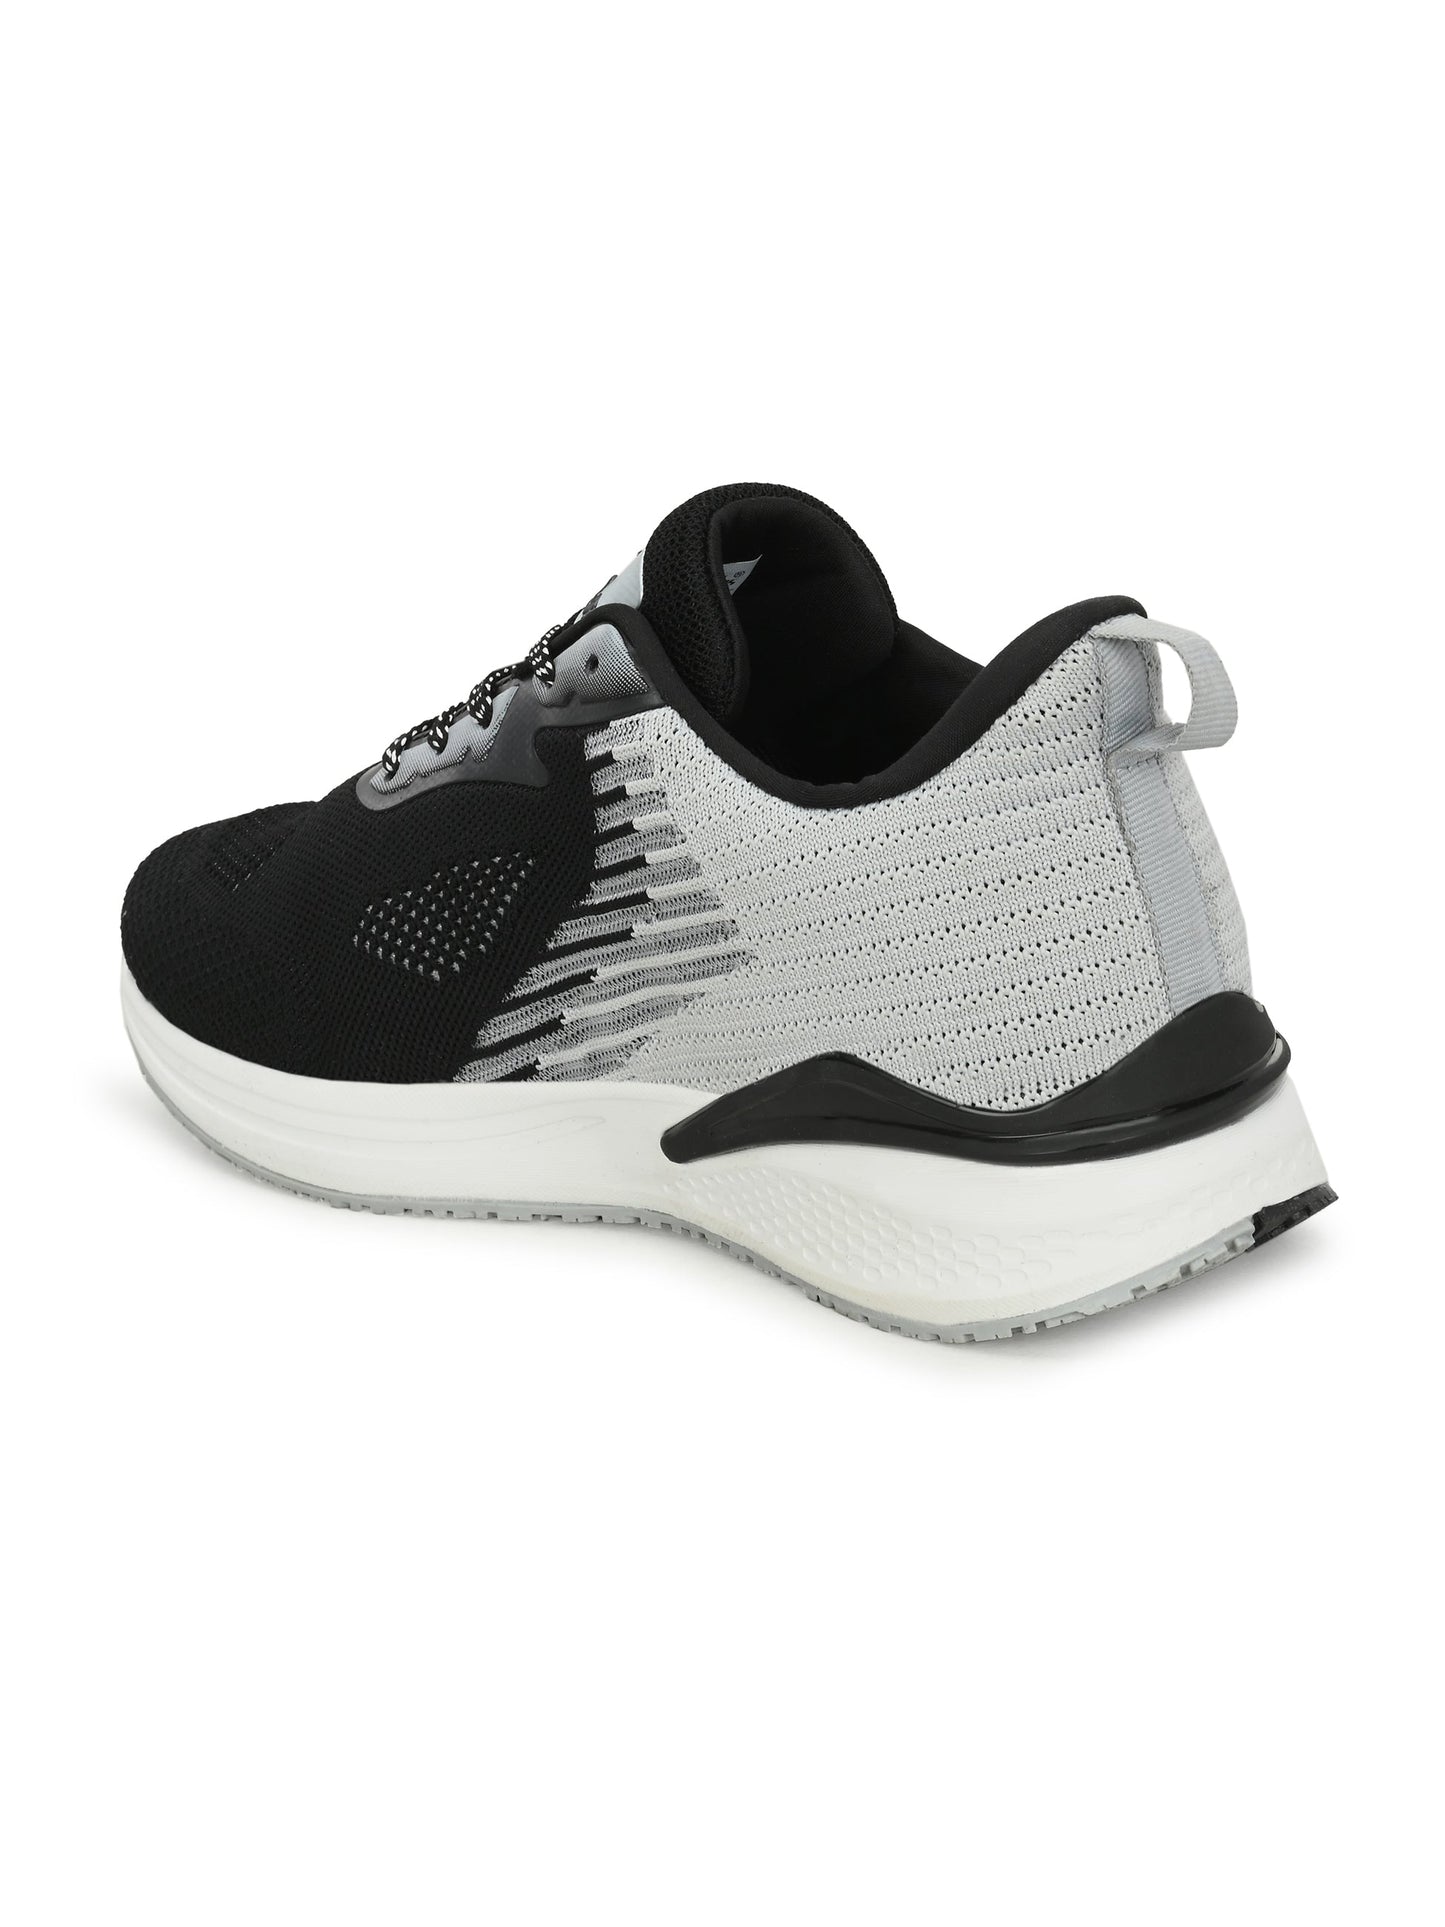 Hirolas® Men's FlexKnit Running Sport Shoes - BlackGrey HRLMP08BGR